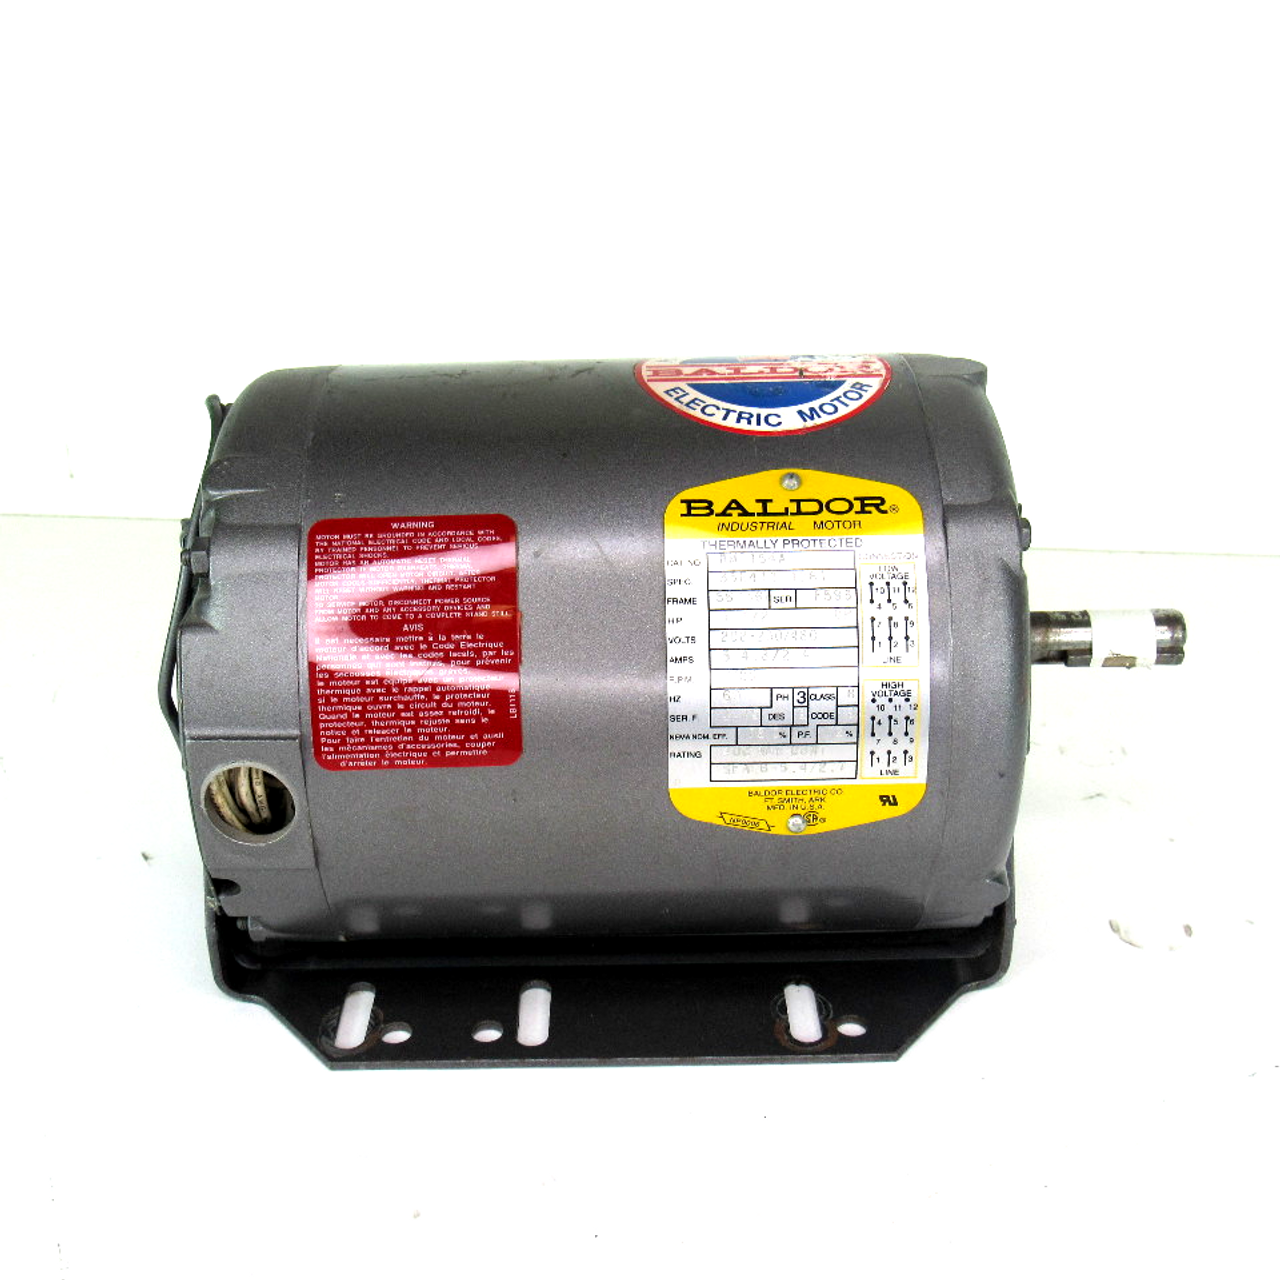 Baldor RM3154A HVAC Motor, 1 1/2 HP, 208-230/460V, 5-4.8/2.4 Amps, 1725 RPM, 60Hz, 3-Phase